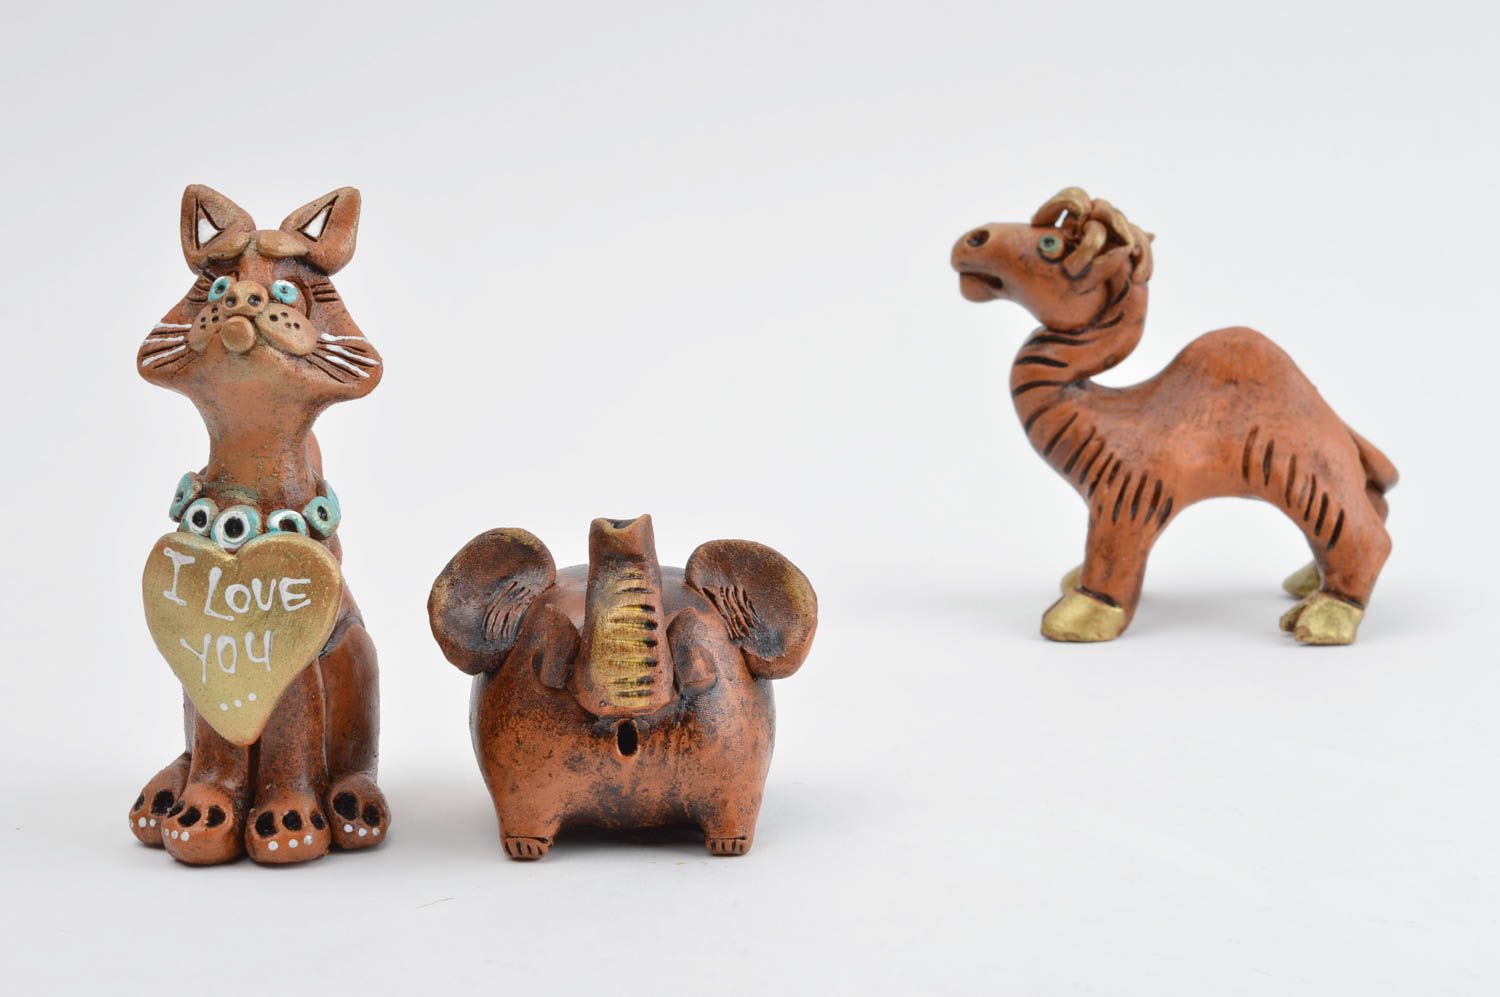 Handmade decorations ceramic figurines animal figurines for decorative use only photo 2